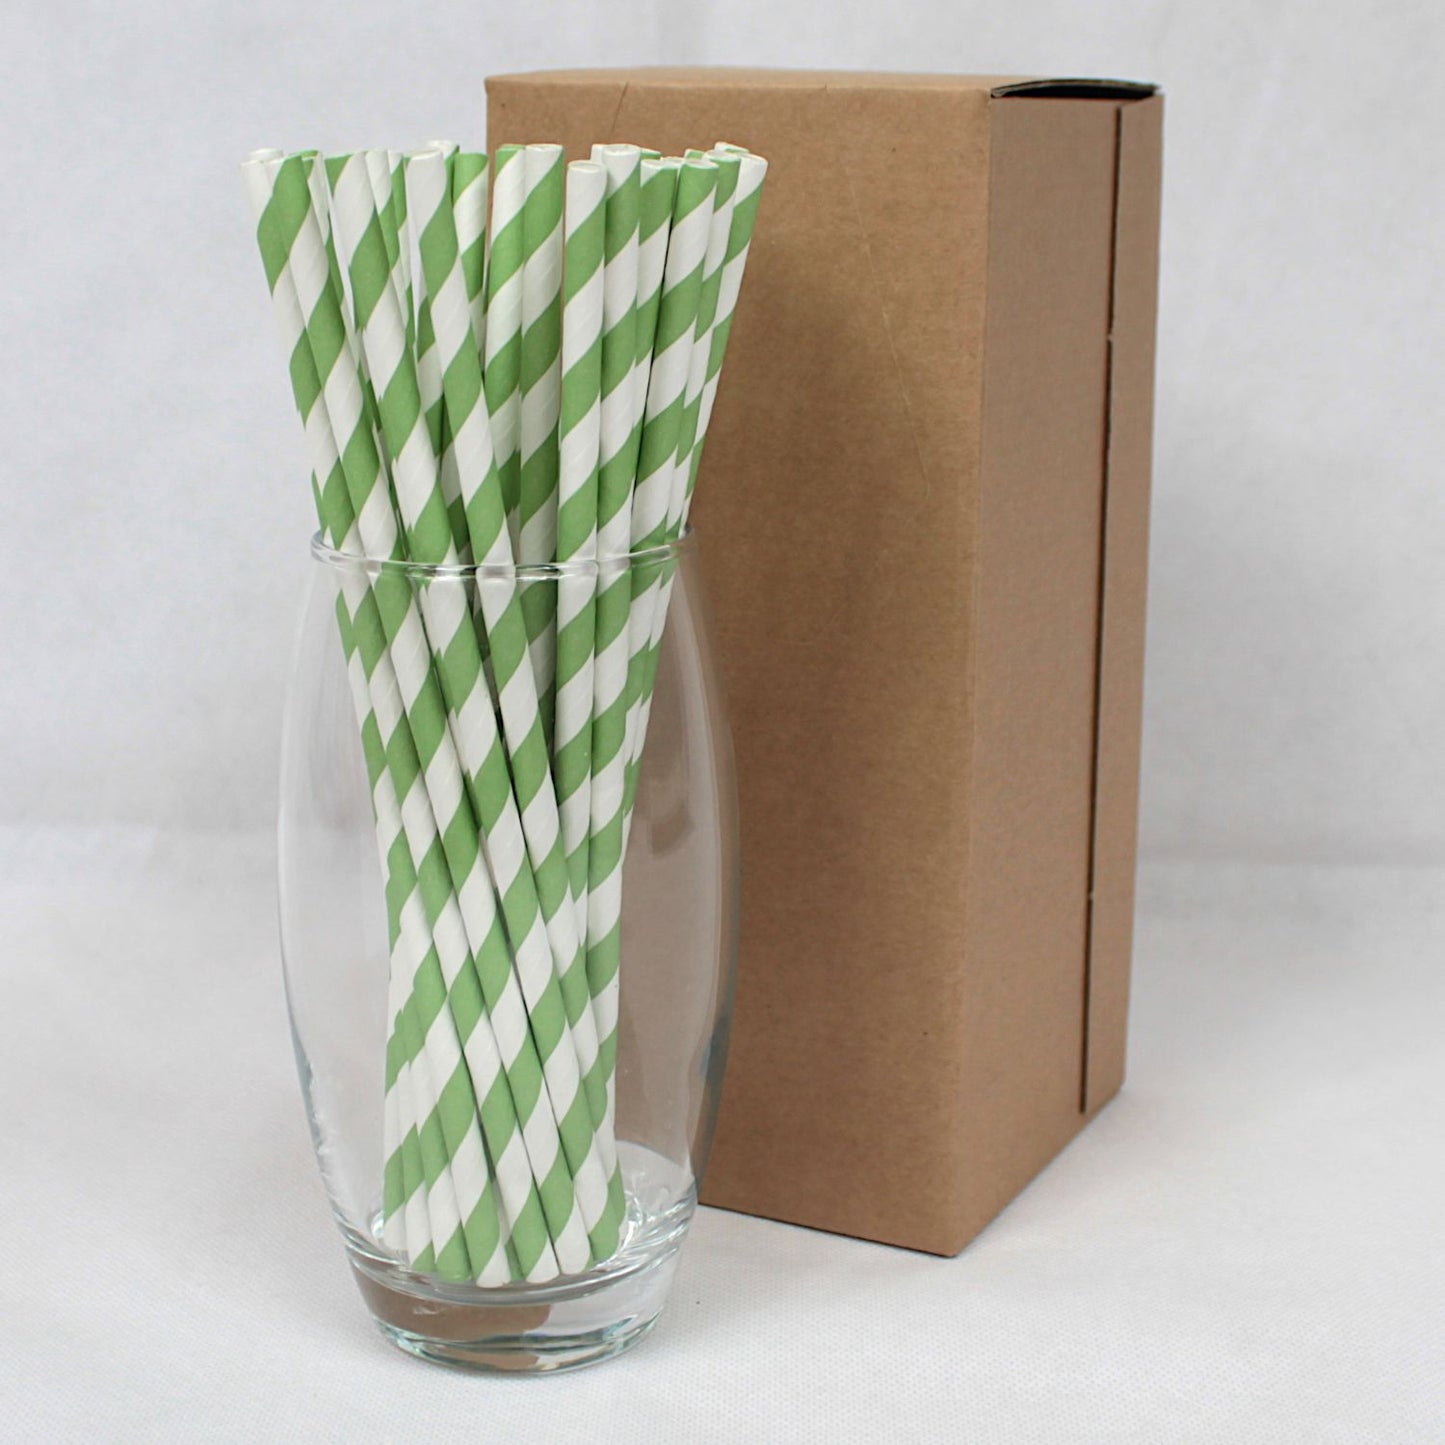 Green & White Striped Paper Straws (6mm x 200mm) - Intrinsic Paper Straws